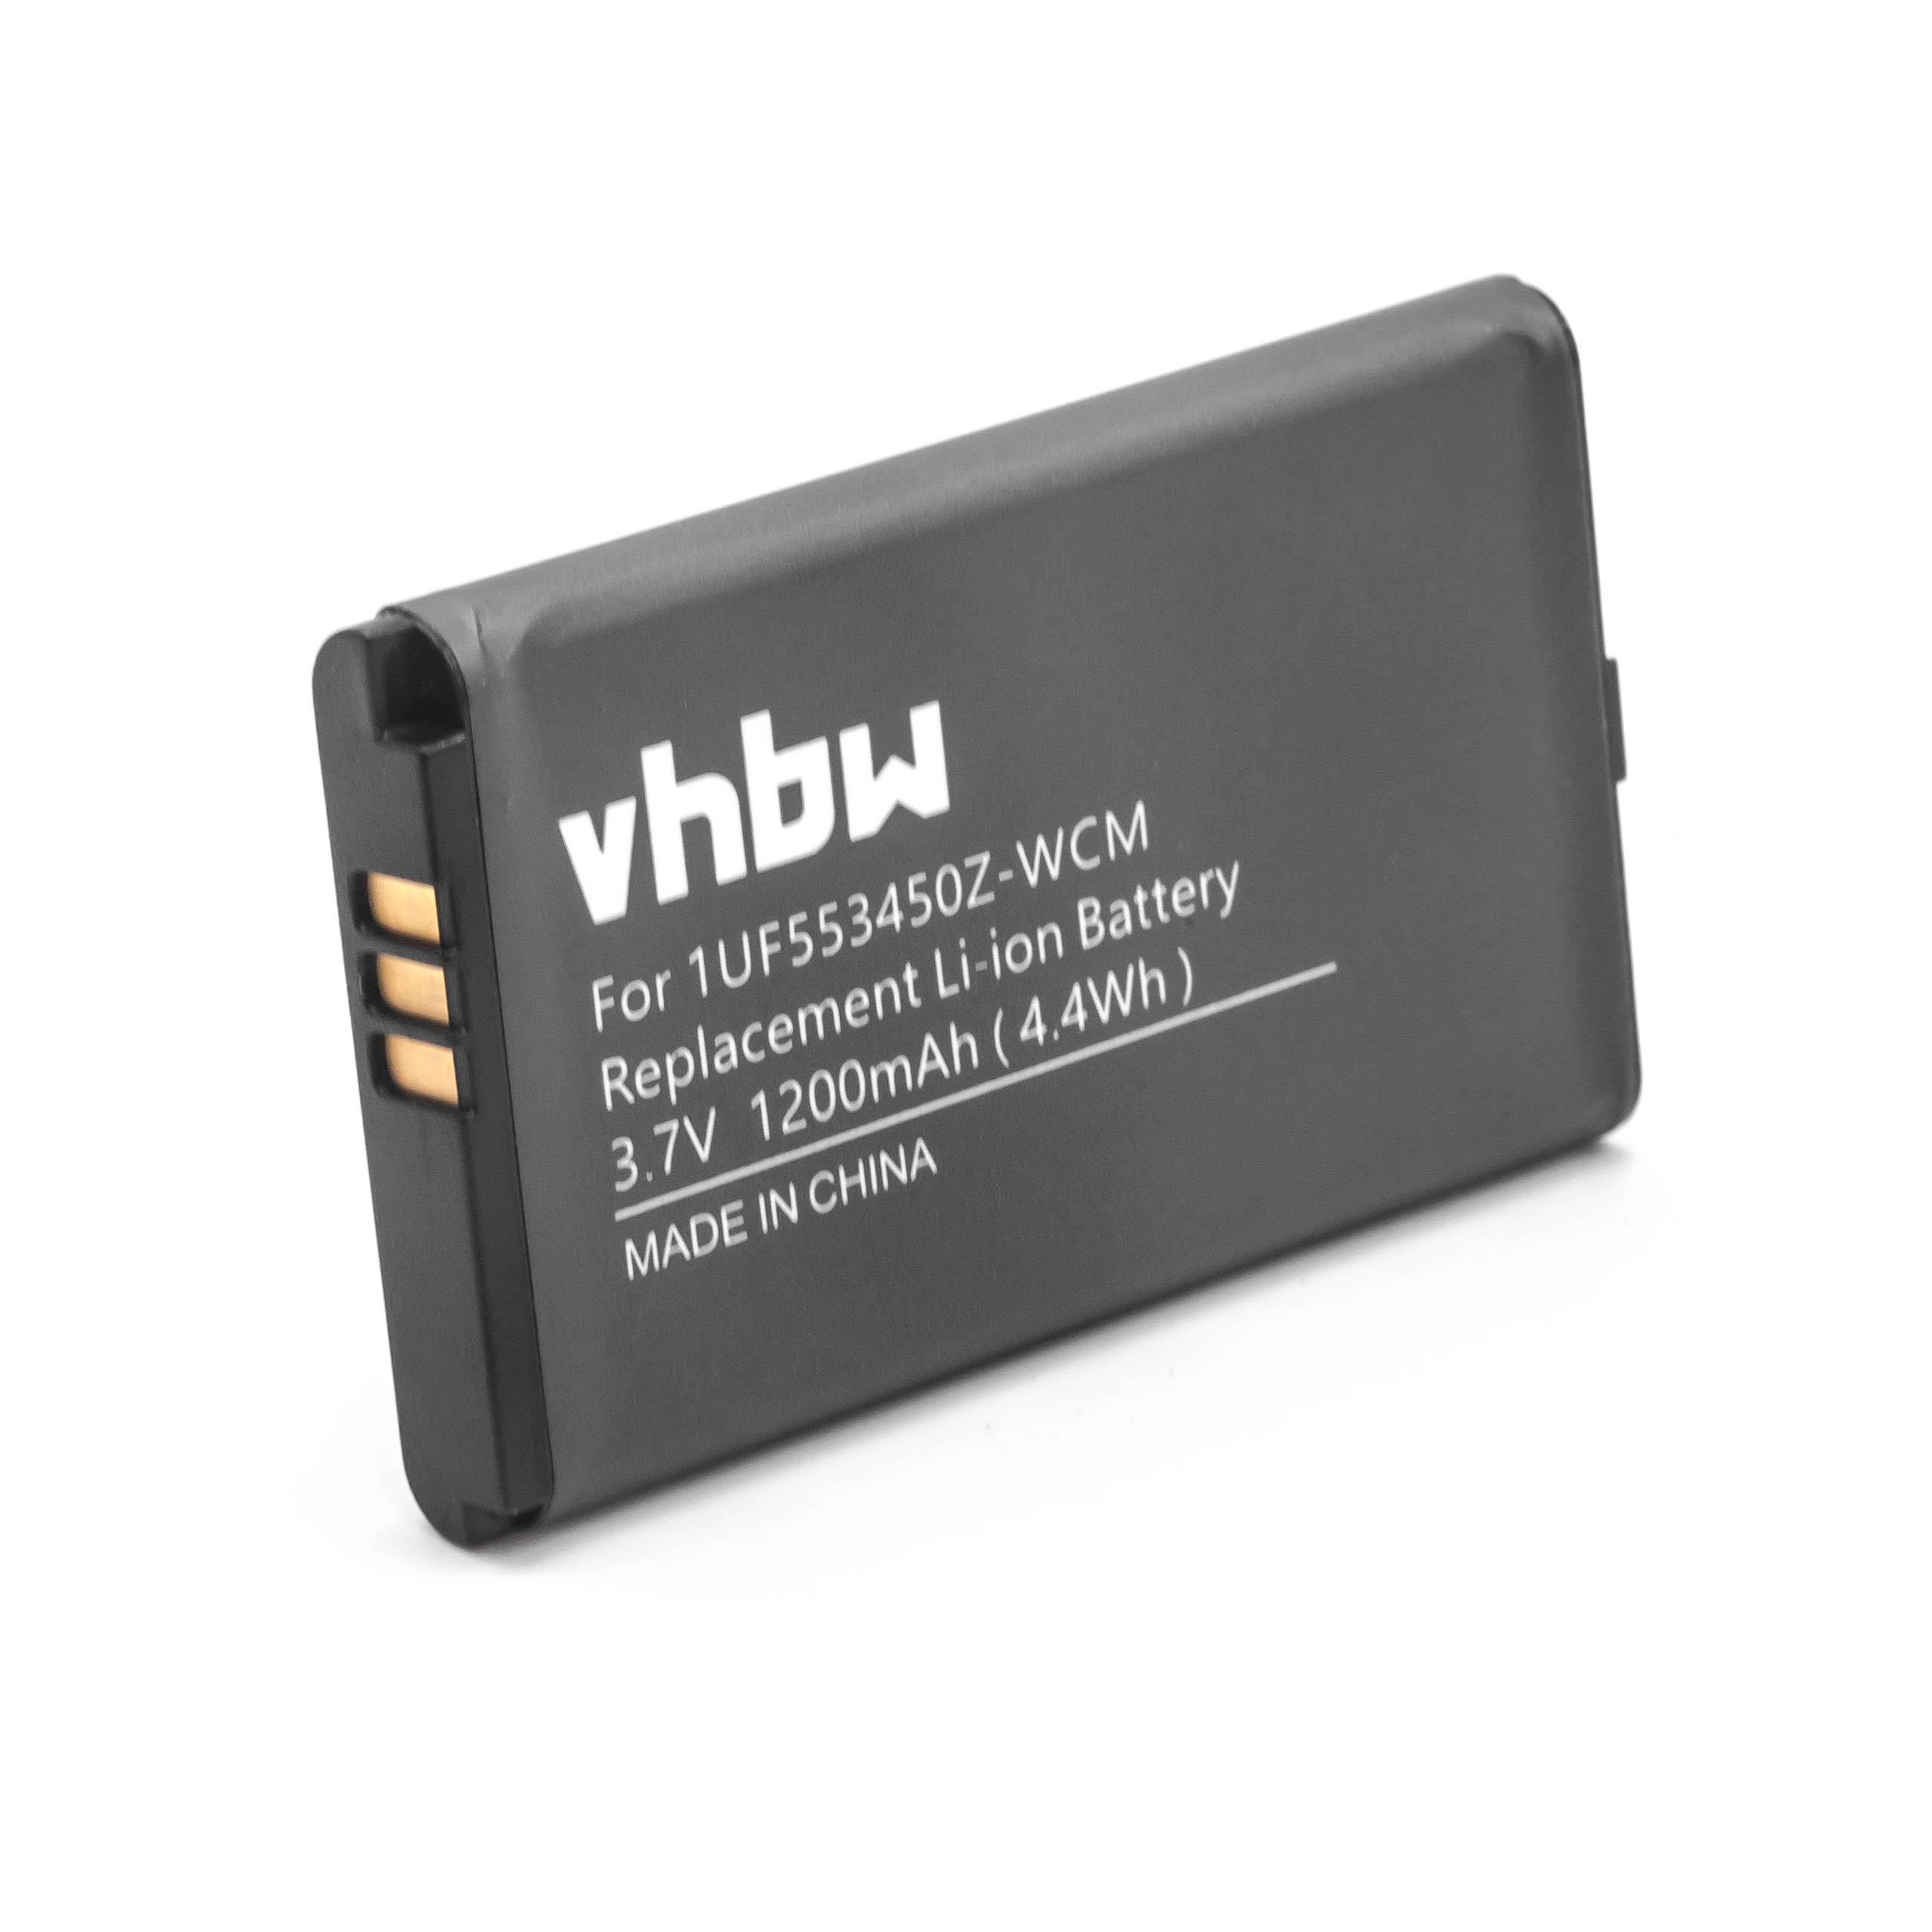 Batteria per tablet sostituisce 1UF553450Z-WCM Bamboo - 1200mAh 3,7V Li-Ion